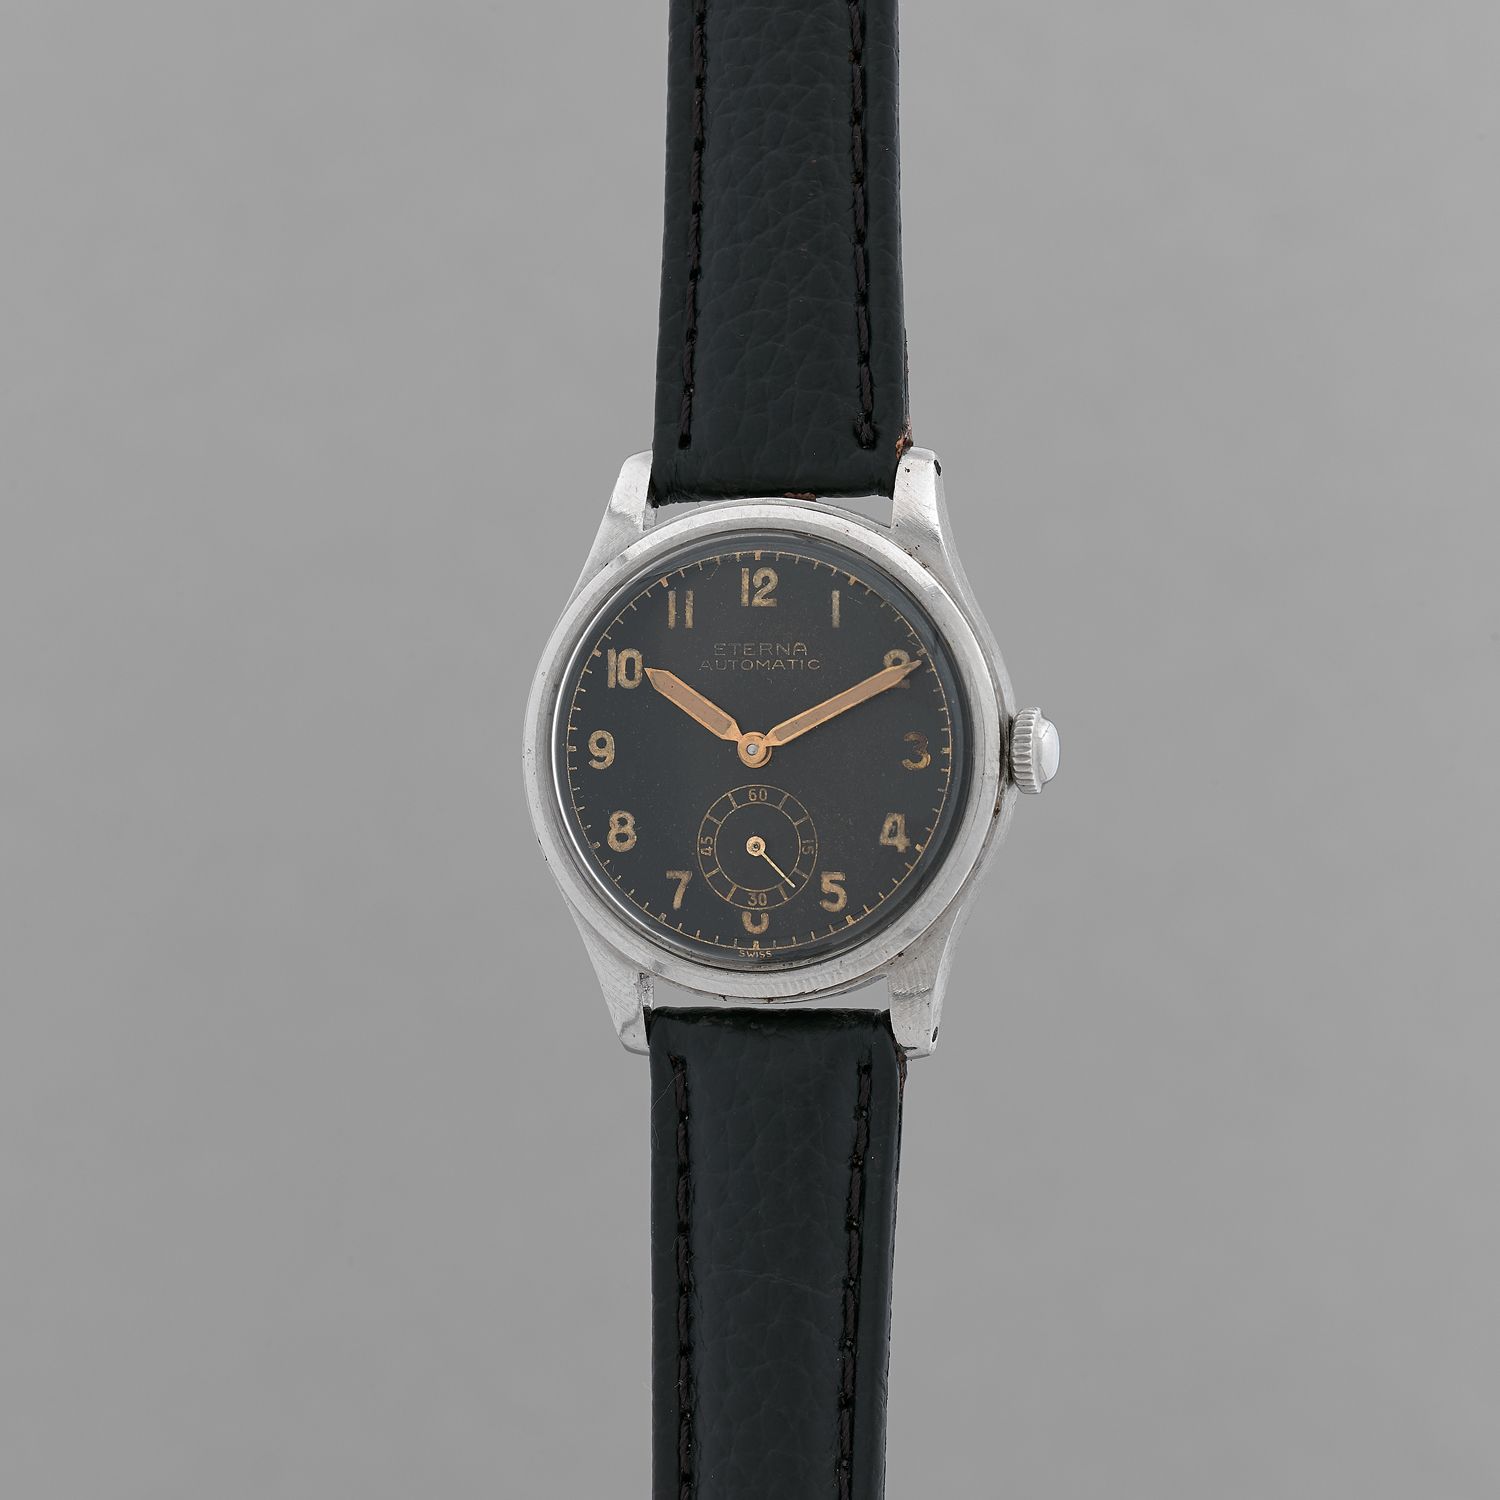 Null Ертаннова
军事类型。
约1940年。
钢制腕表。圆形的箱子。黑色表盘上绘有阿拉伯数字，秒针位于6点钟方向。机械机芯，自动上链。表盘、表壳和机&hellip;